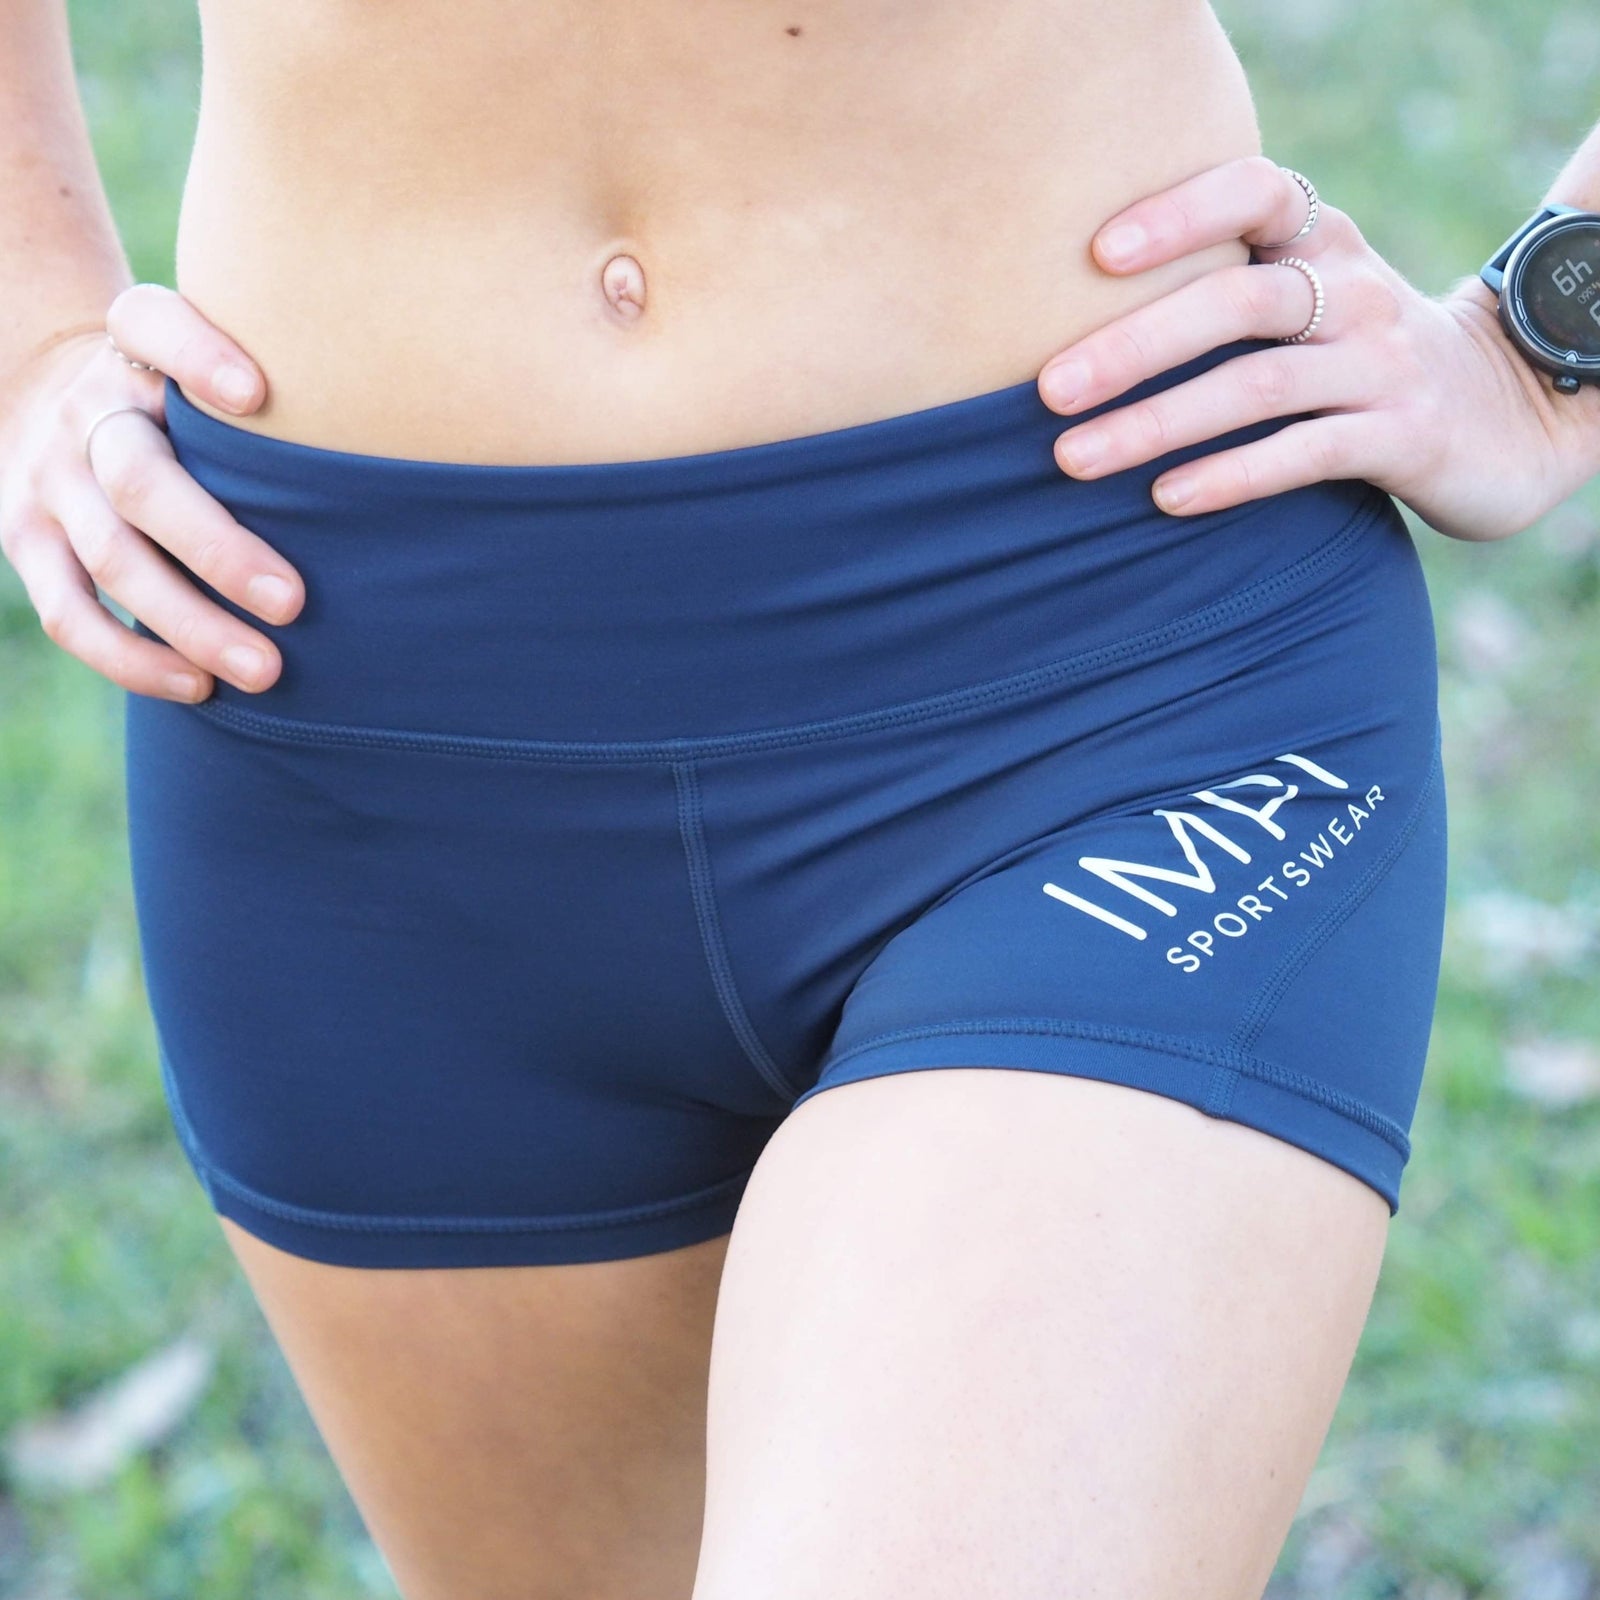 Born To Run Tagged running shorts for girls - Impi Sportswear